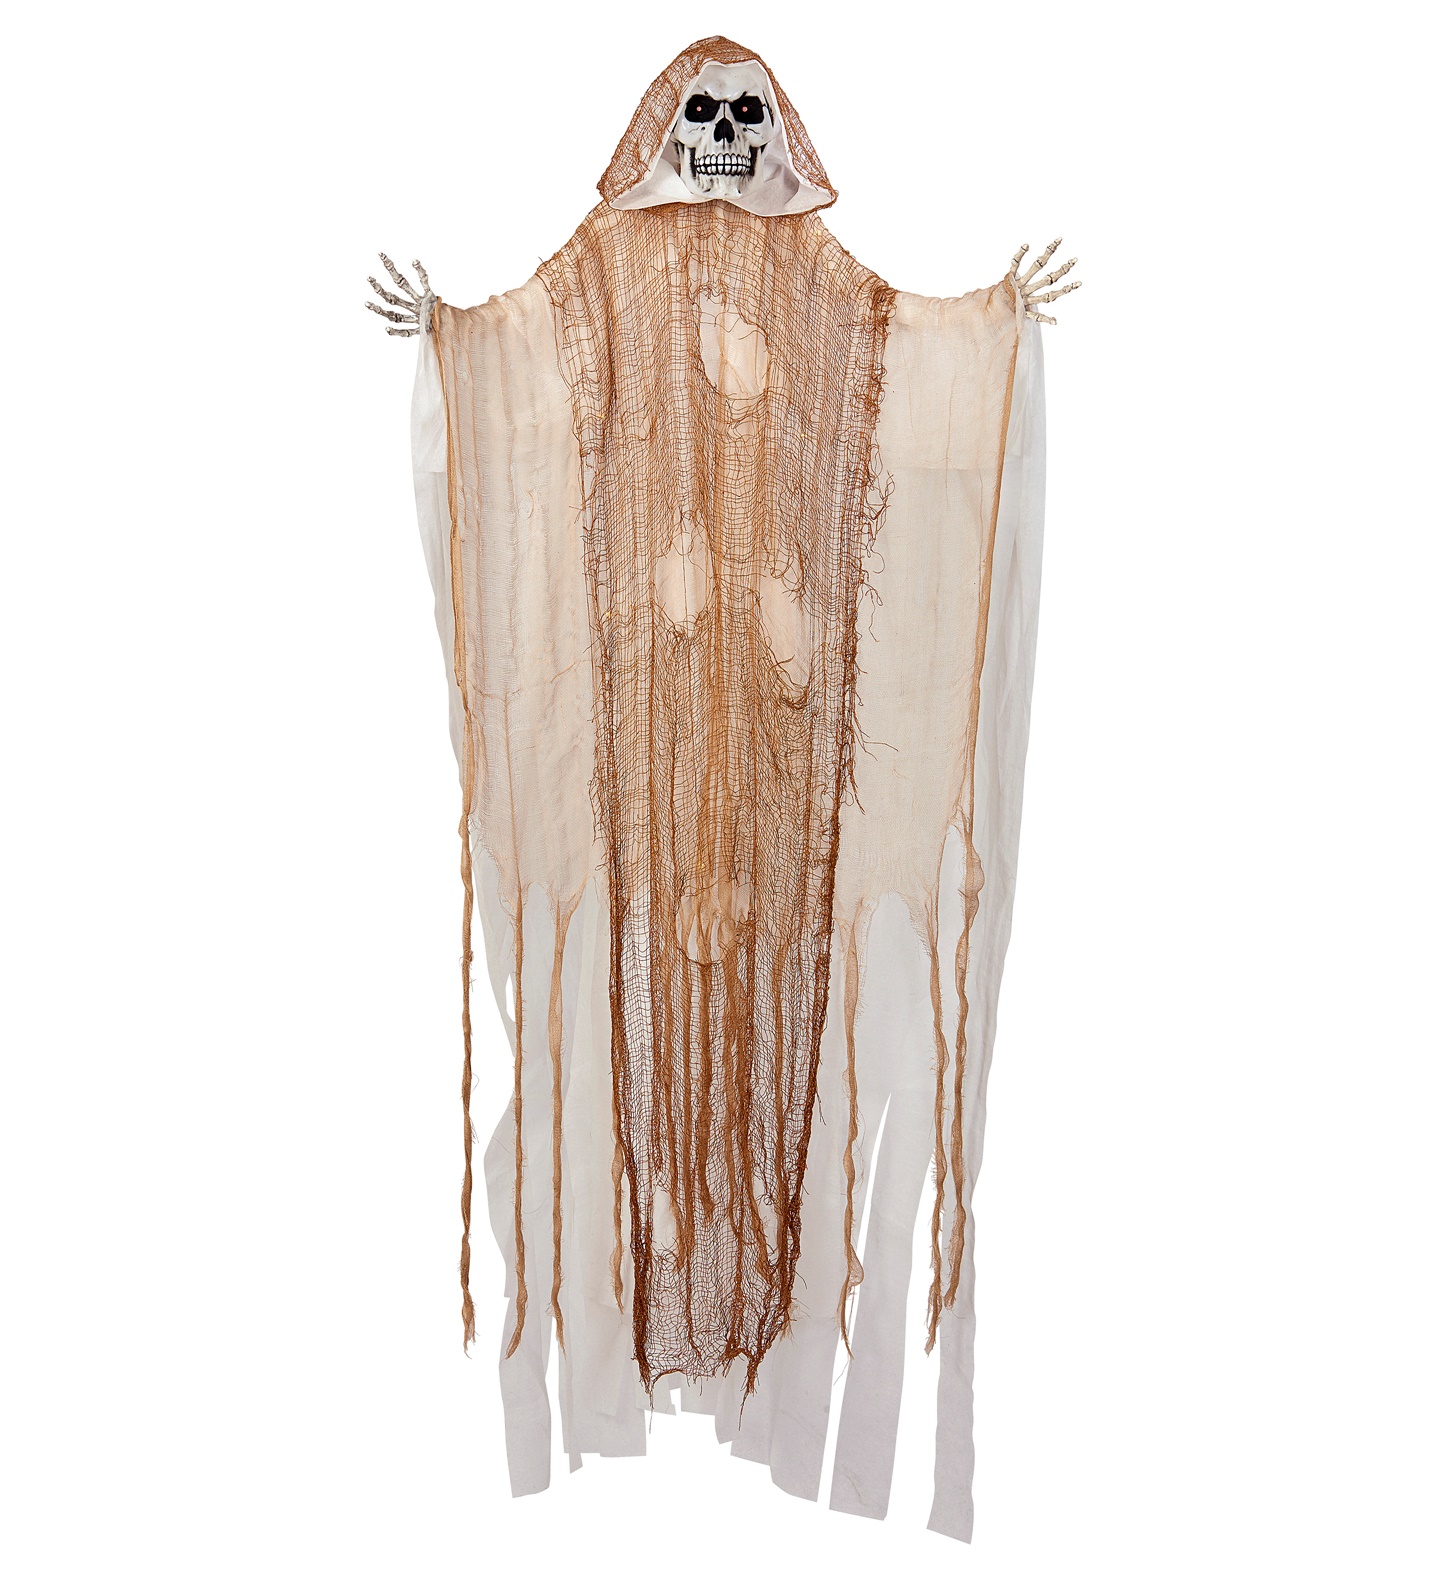 XXL Figur Sensemann Tod Skelett beleuchtet 170cm groß Halloween Deko Figur #824